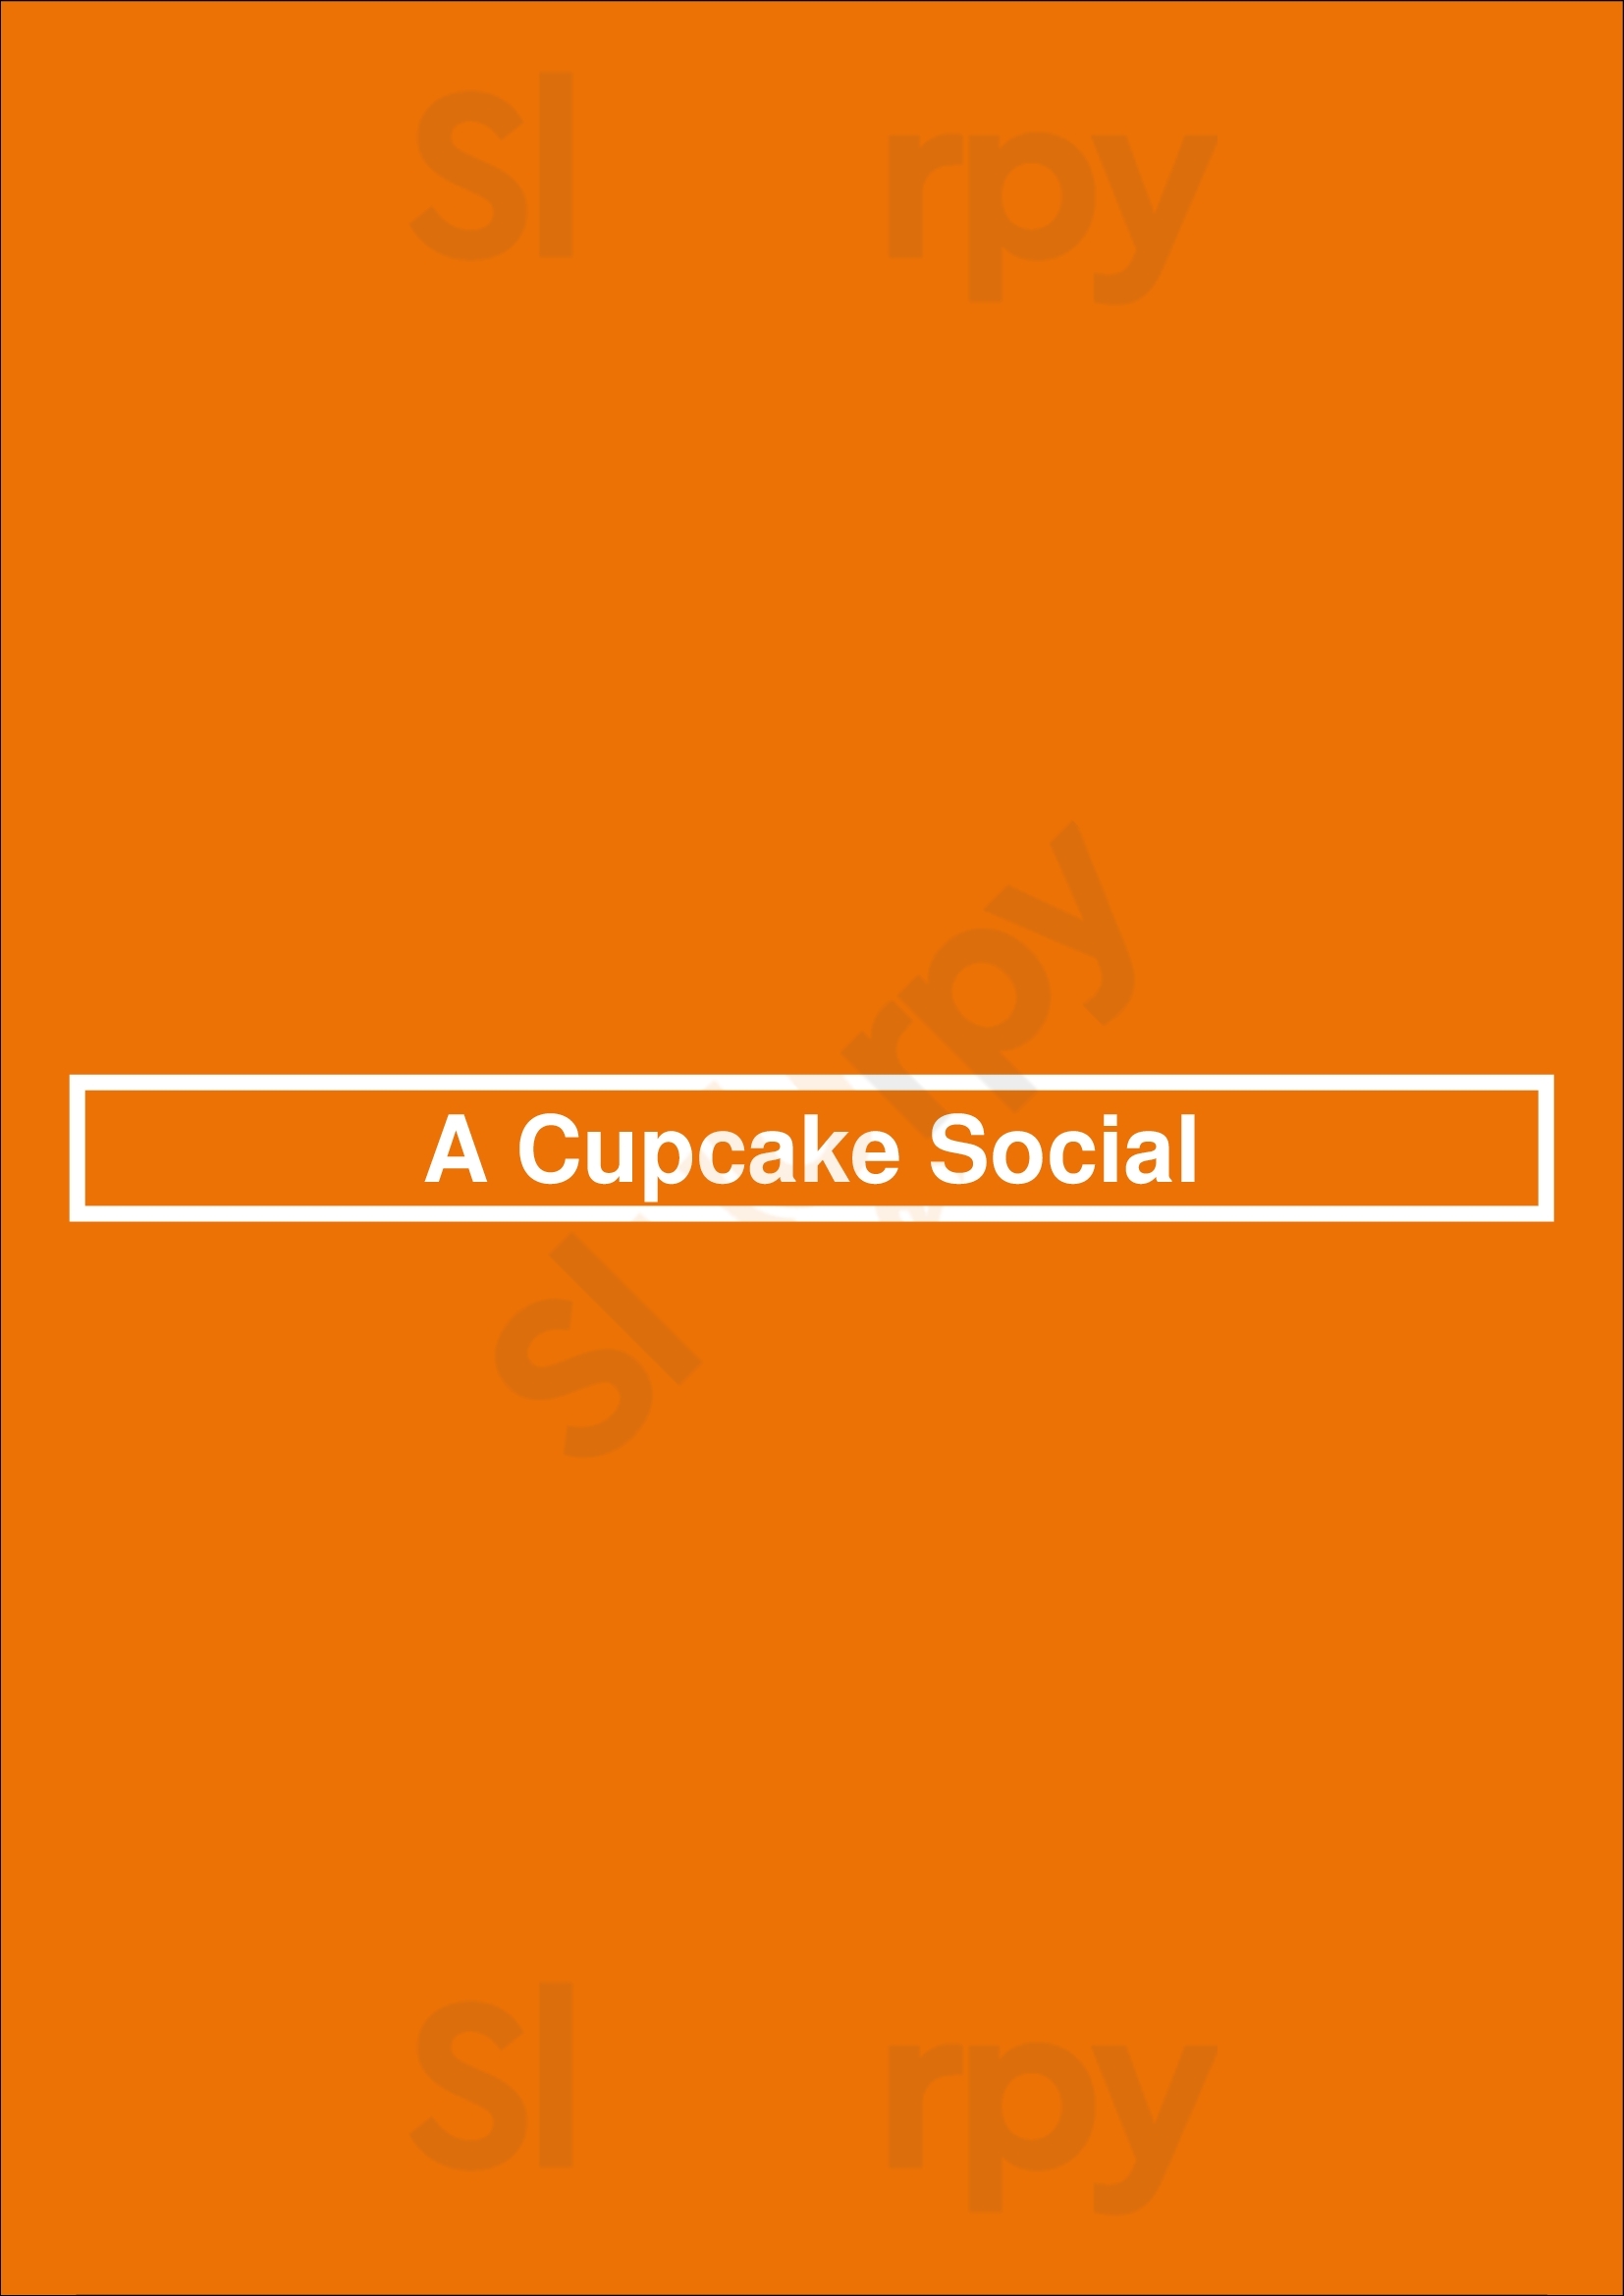 A Cupcake Social Minneapolis Menu - 1